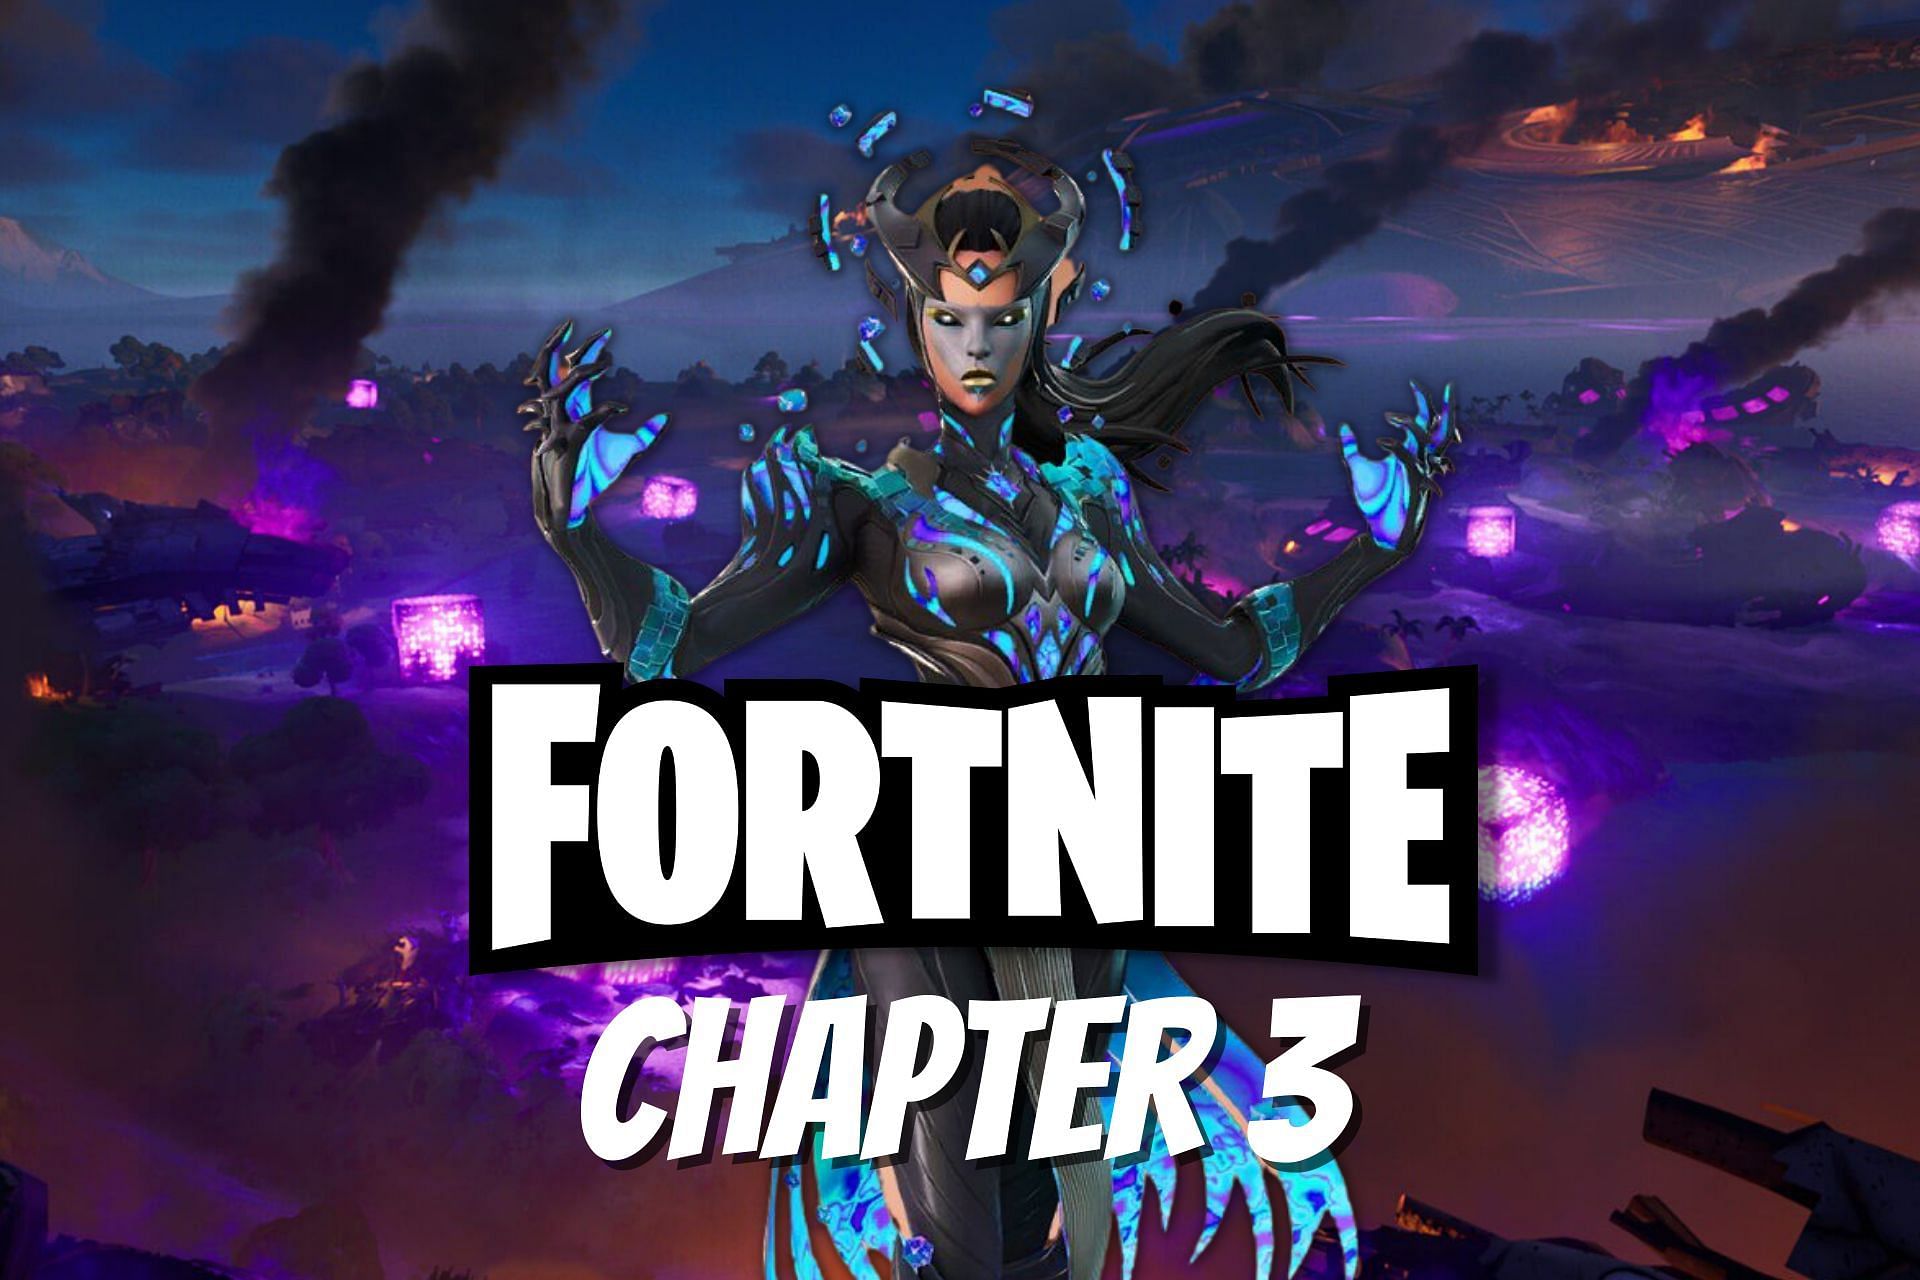 When does Fortnite Chapter 3 start?